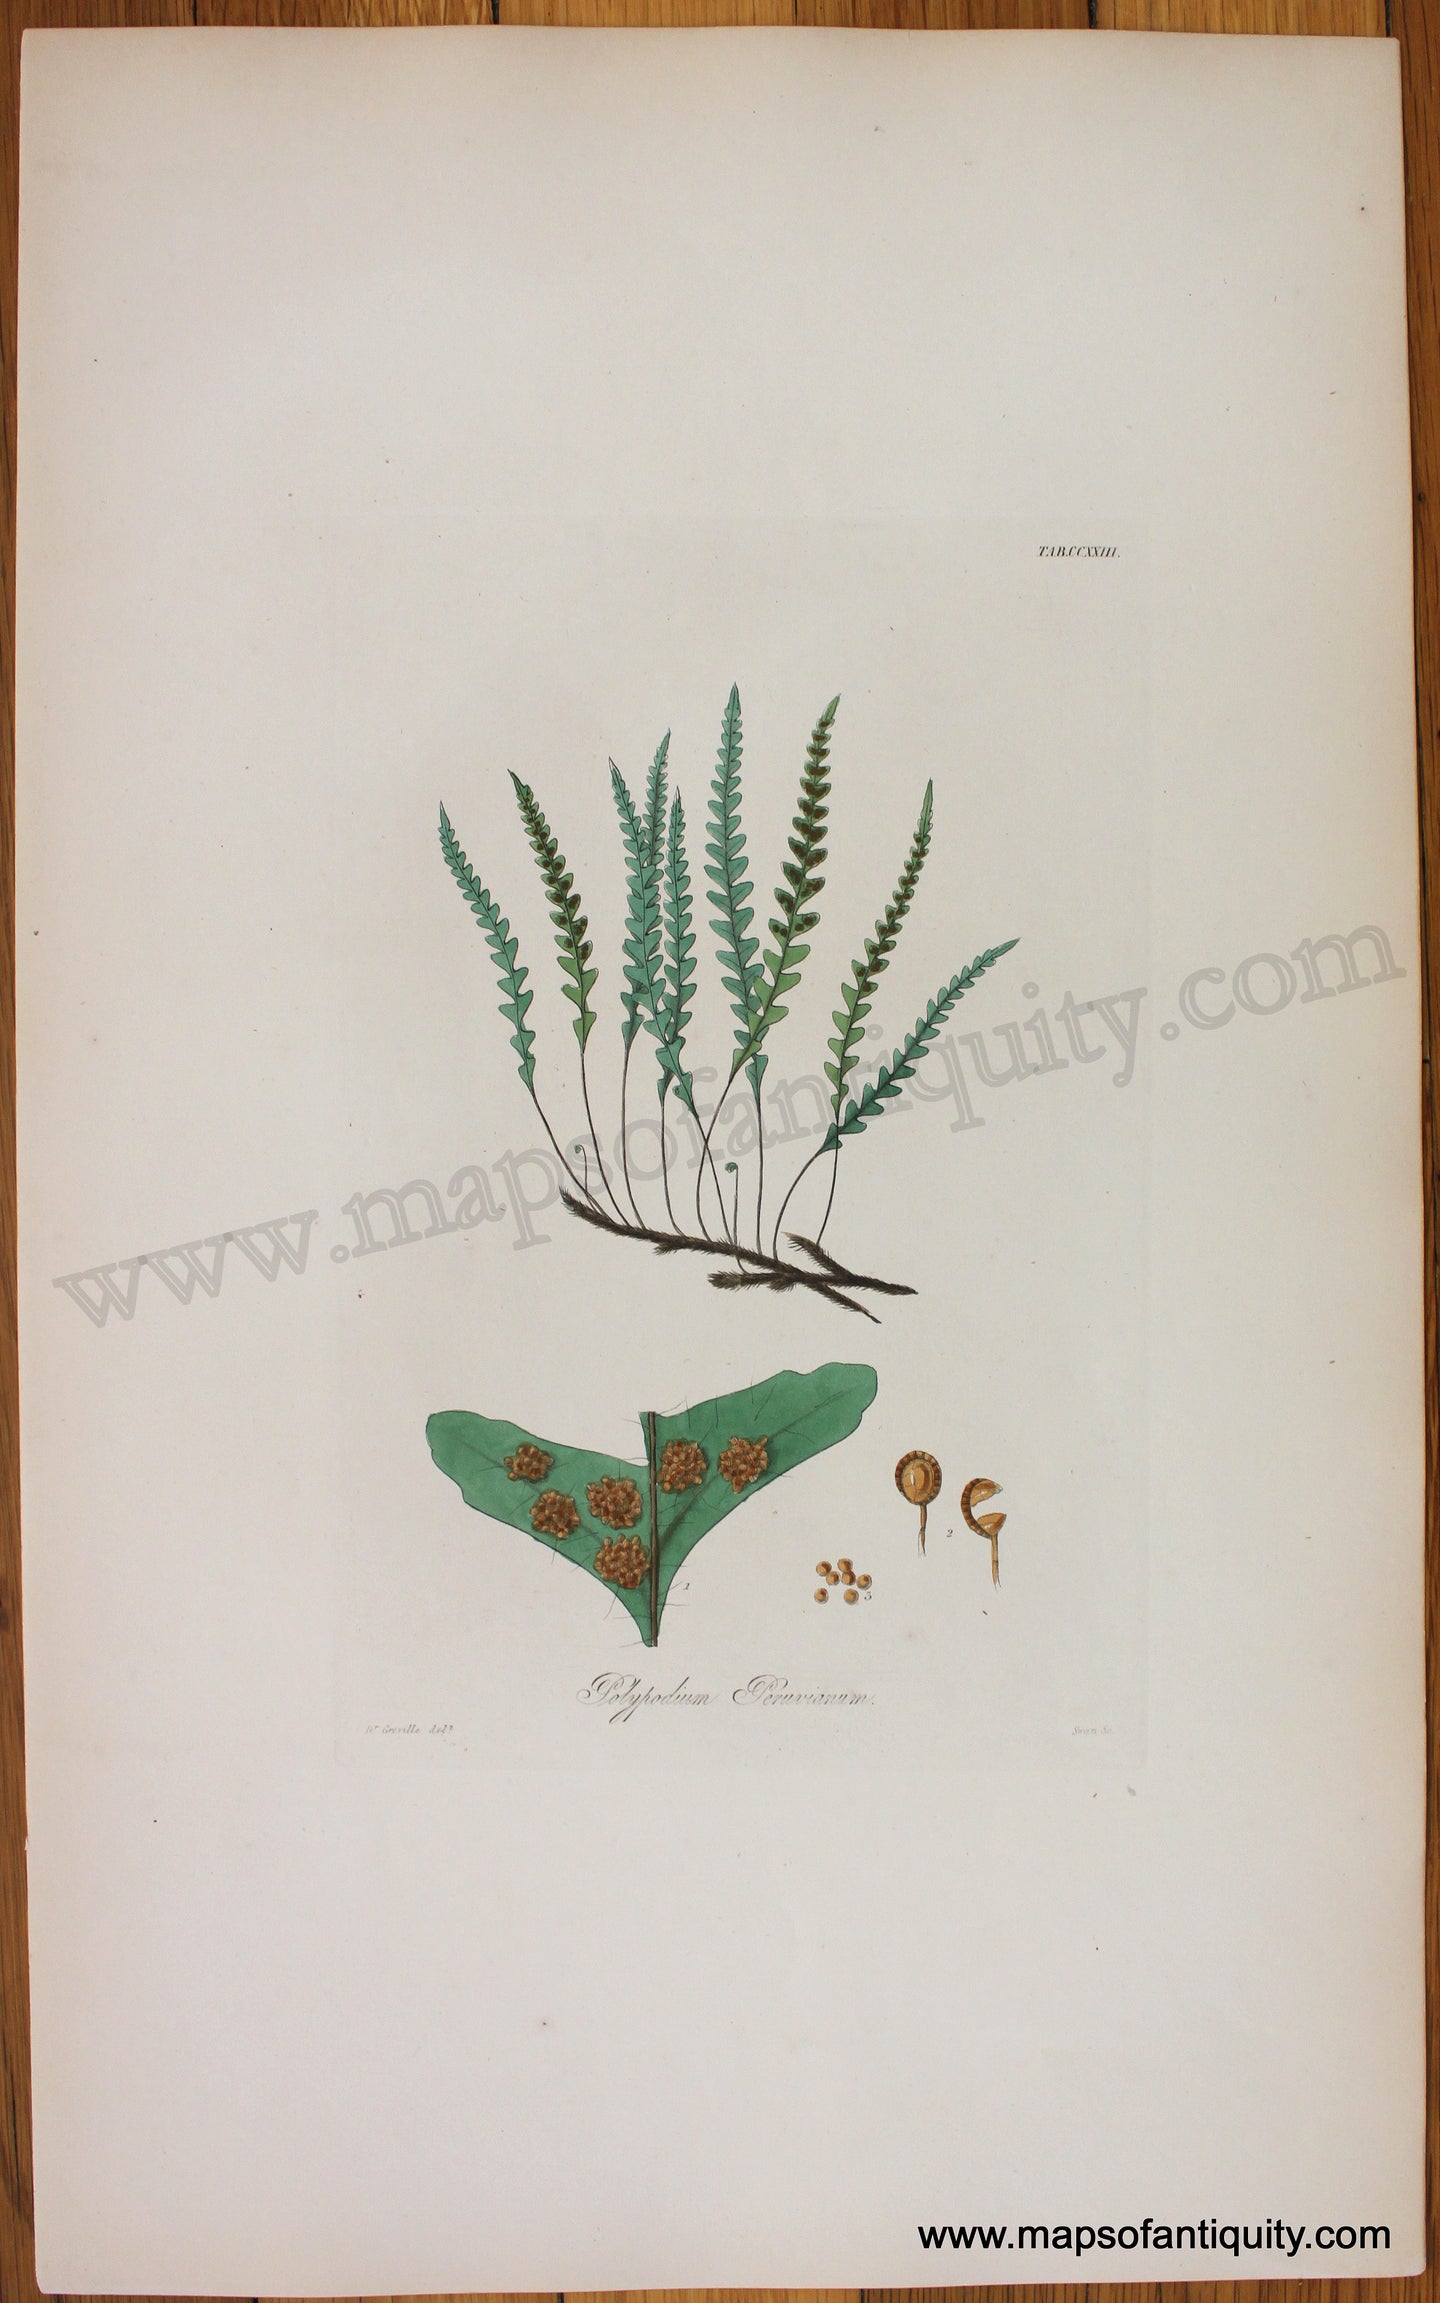 Antique-Botanical-Print-Polupodium-Peruvianum-1831-Hooker-Botanical--1800s-19th-century-Maps-of-Antiquity